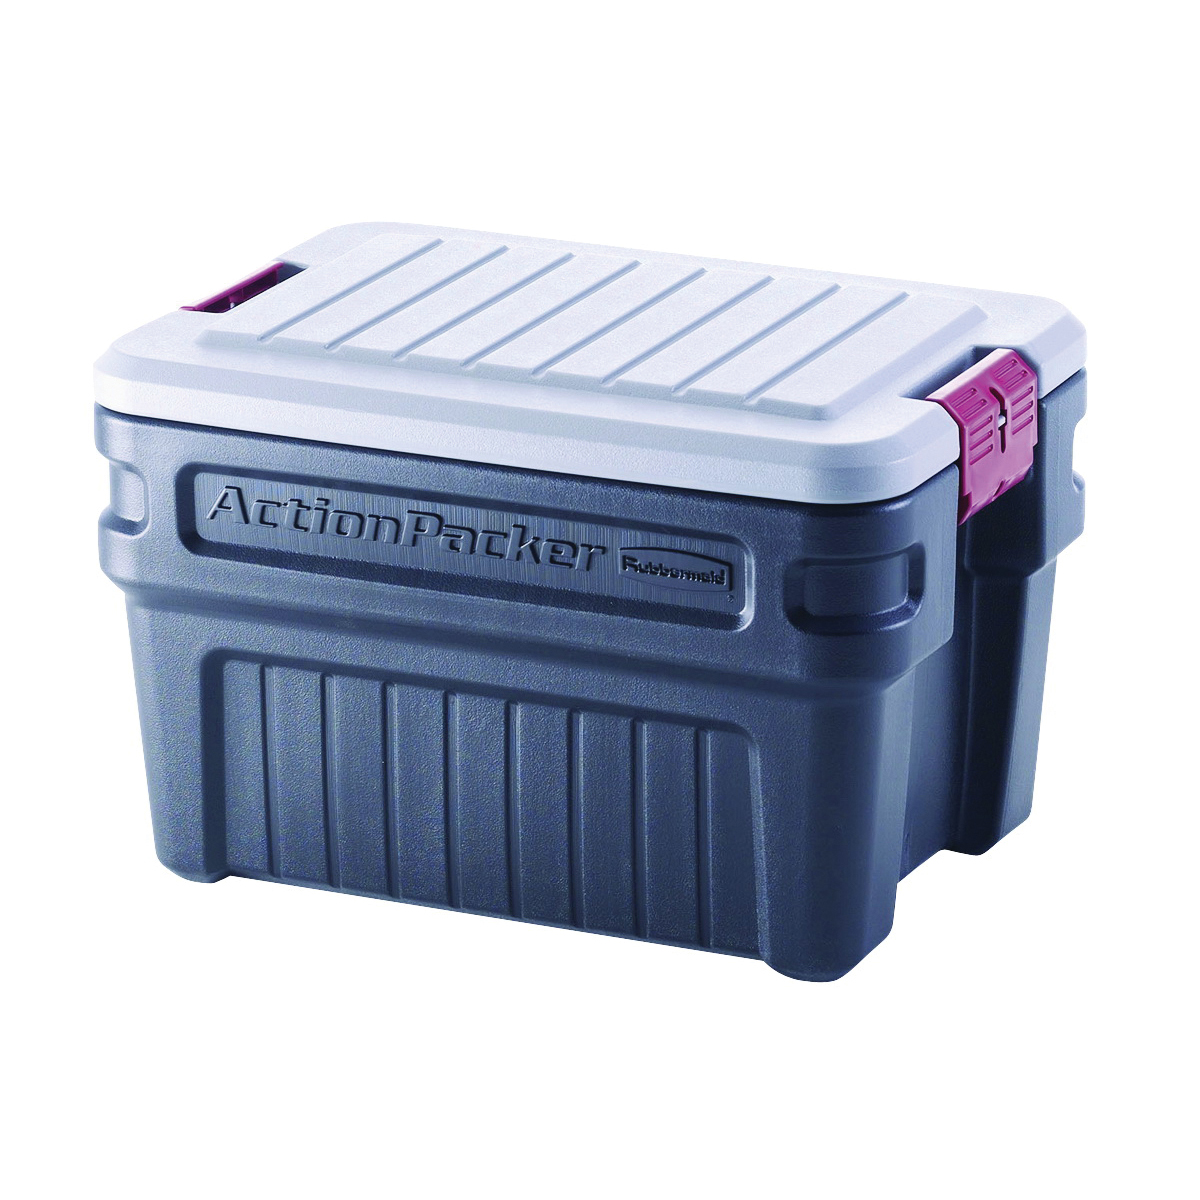 Rubbermaid ActionPacker RMAP240000 Storage Box, Plastic, Black, 26-1/2 in L, 19.3 in W, 17.4 in H - 1